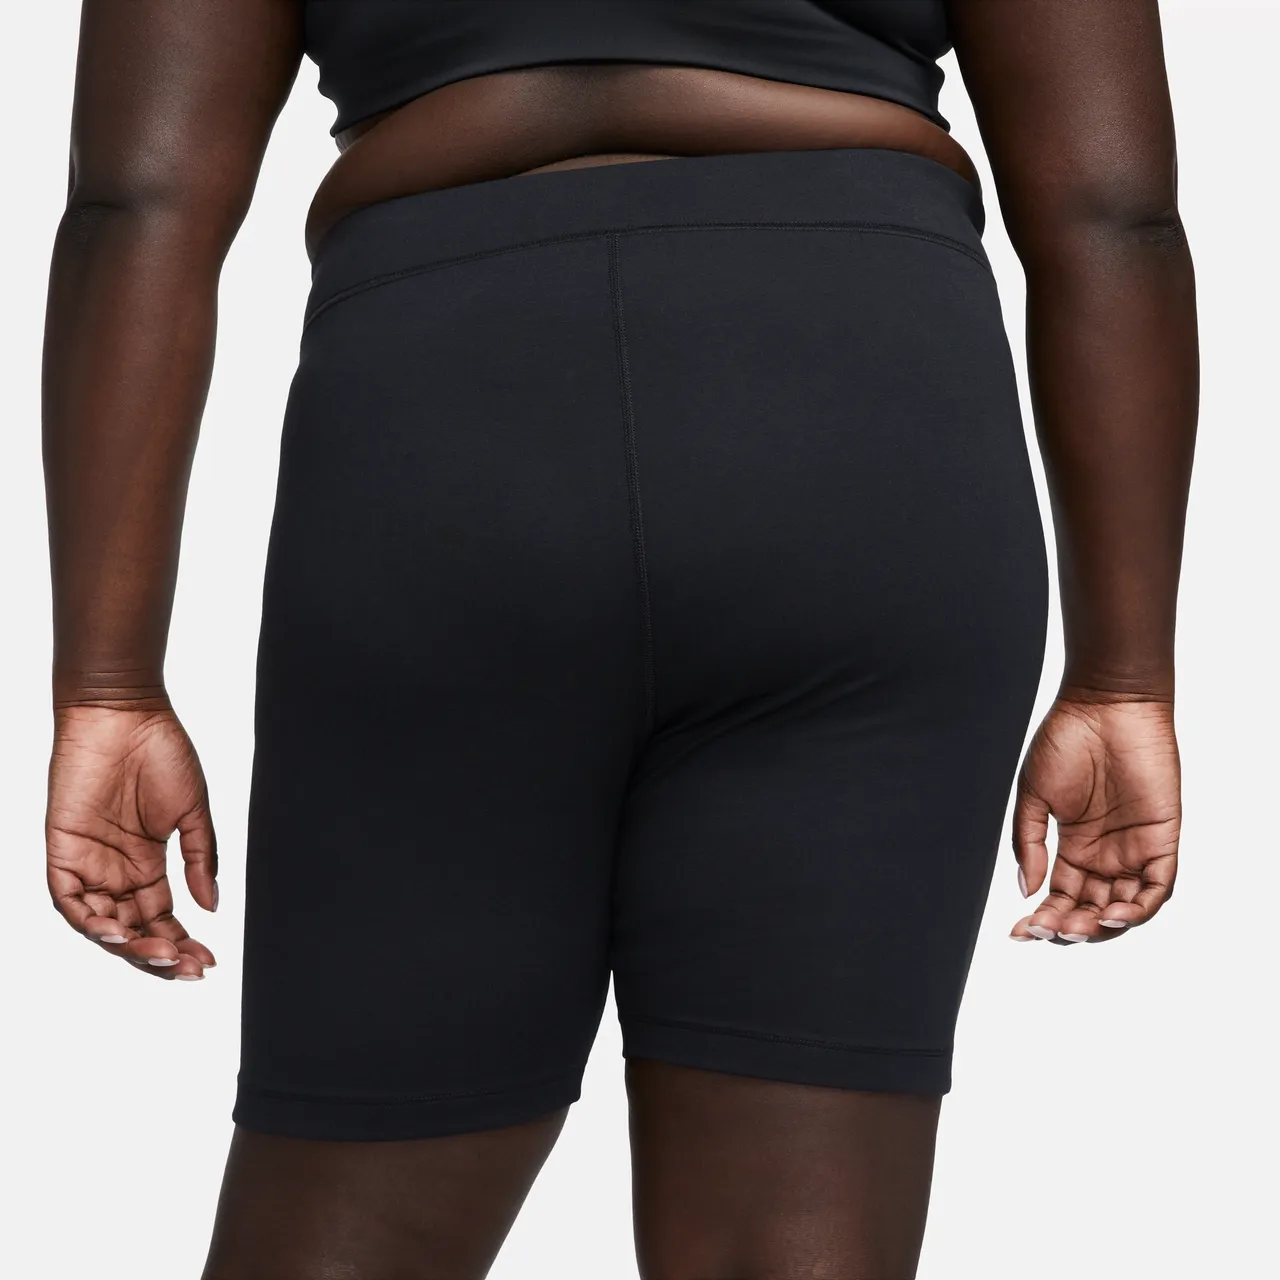 Nike Sportswear Classic Women's High-Waisted 20.5cm (approx.) Biker Shorts - Black - Polyester